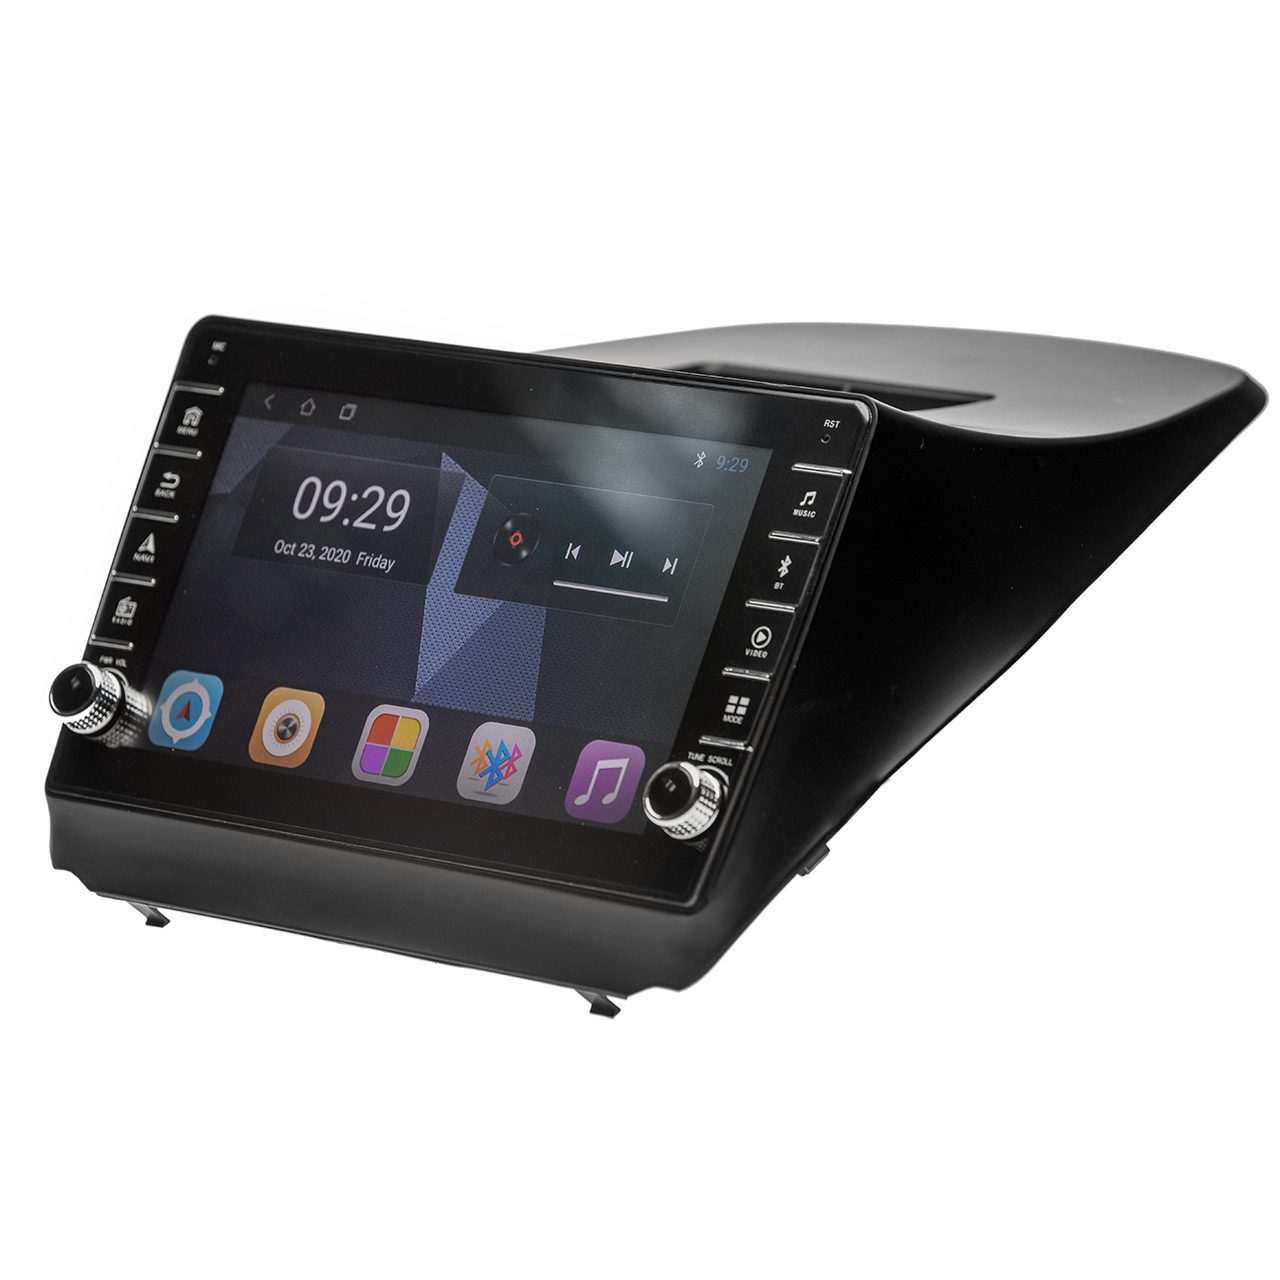 Navigatie AUTONAV PLUS Android GPS Dedicata Hyundai Tucson ix35 2009-2015, Model PRO Memorie 16GB Stocare, 1GB DDR3 RAM, Butoane Laterale Si Regulator Volum, Display 8